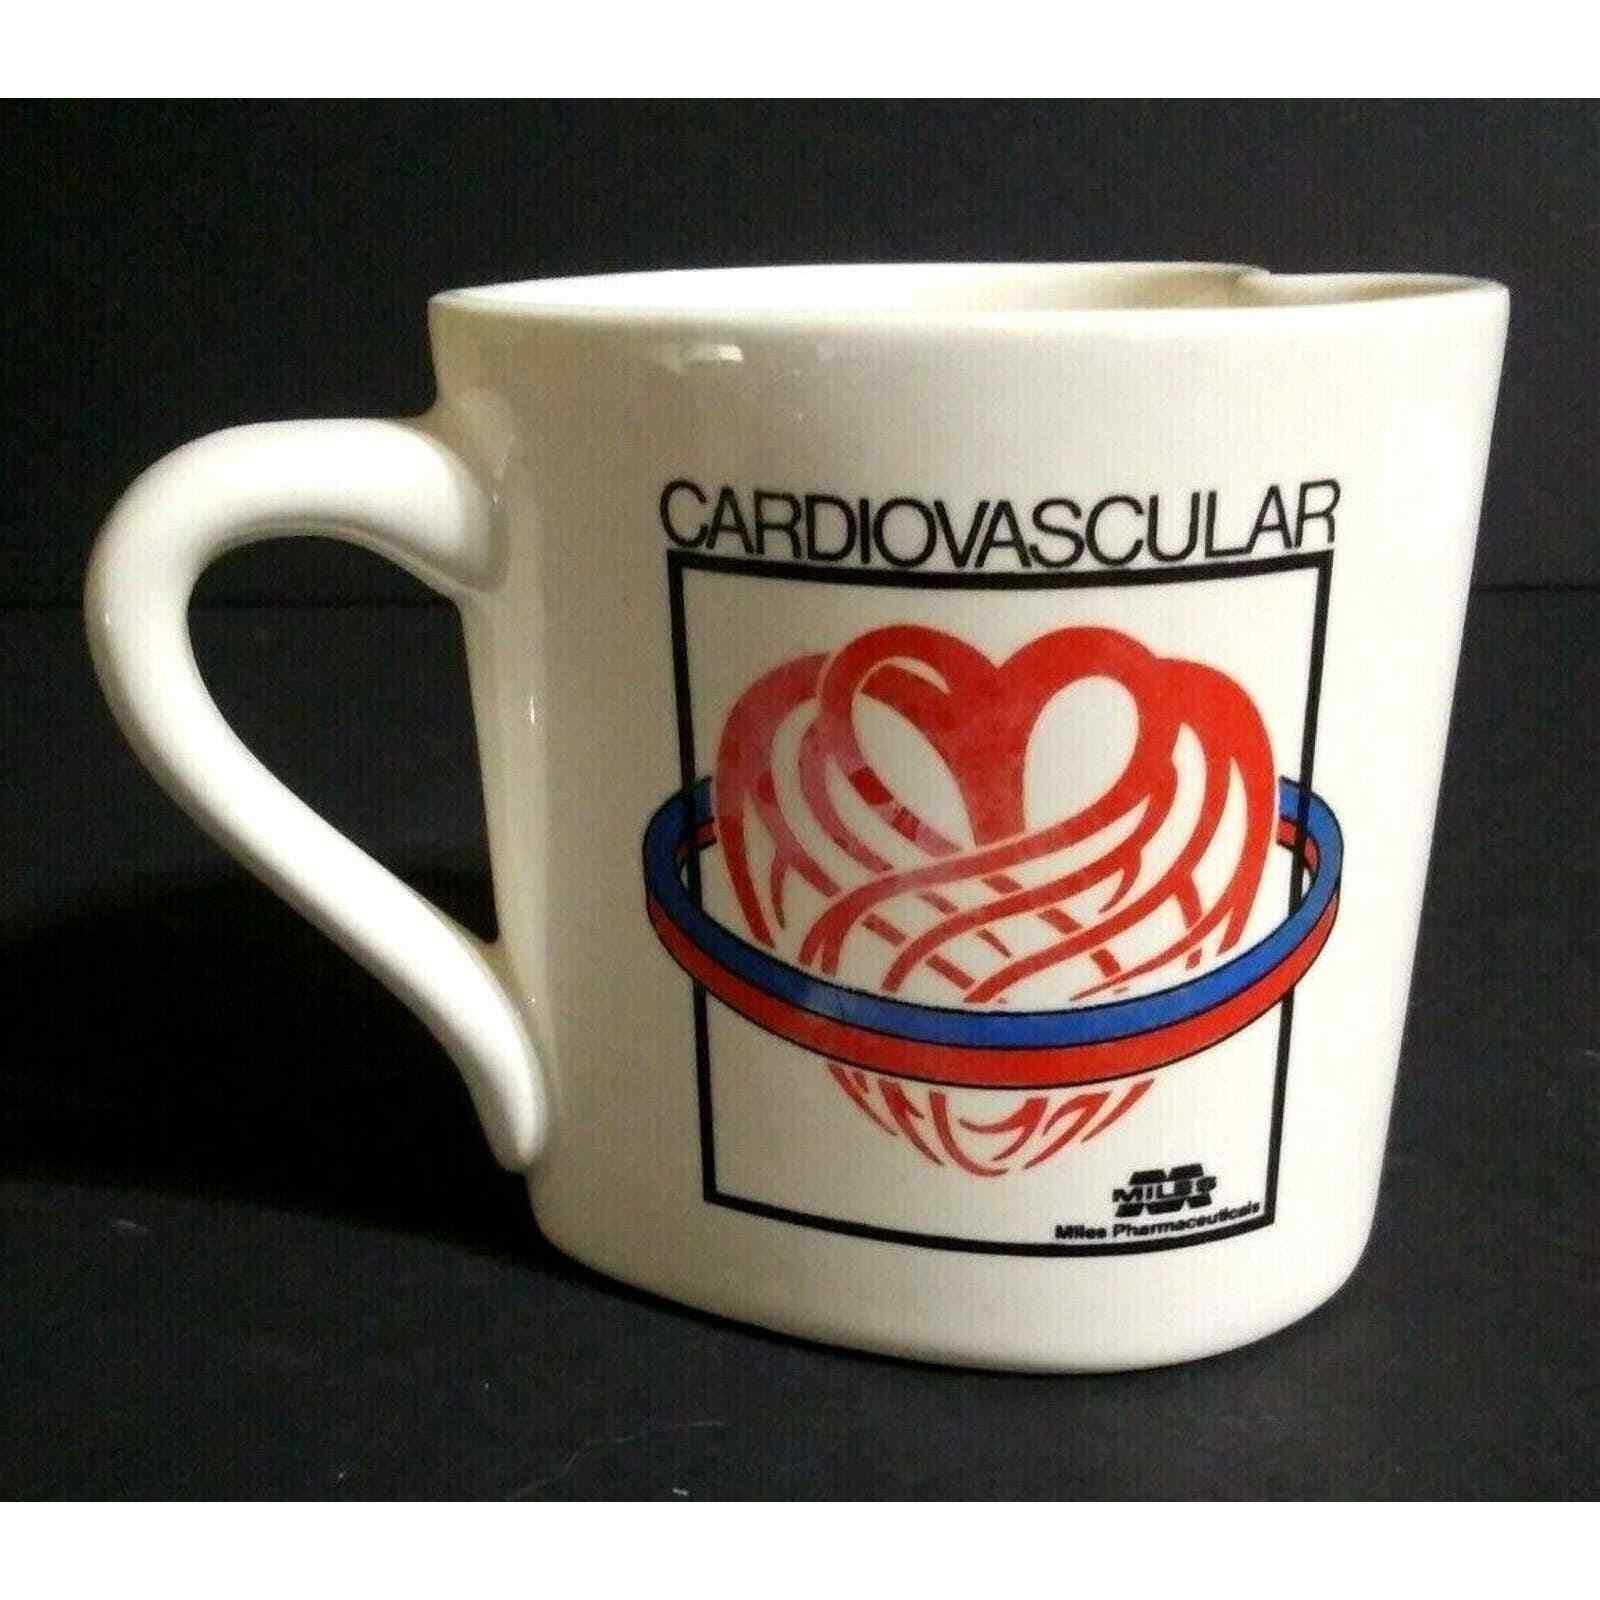 Cardiovascular Adalat Miles Heart Shaped Coffee Cup Mug Red White Blue